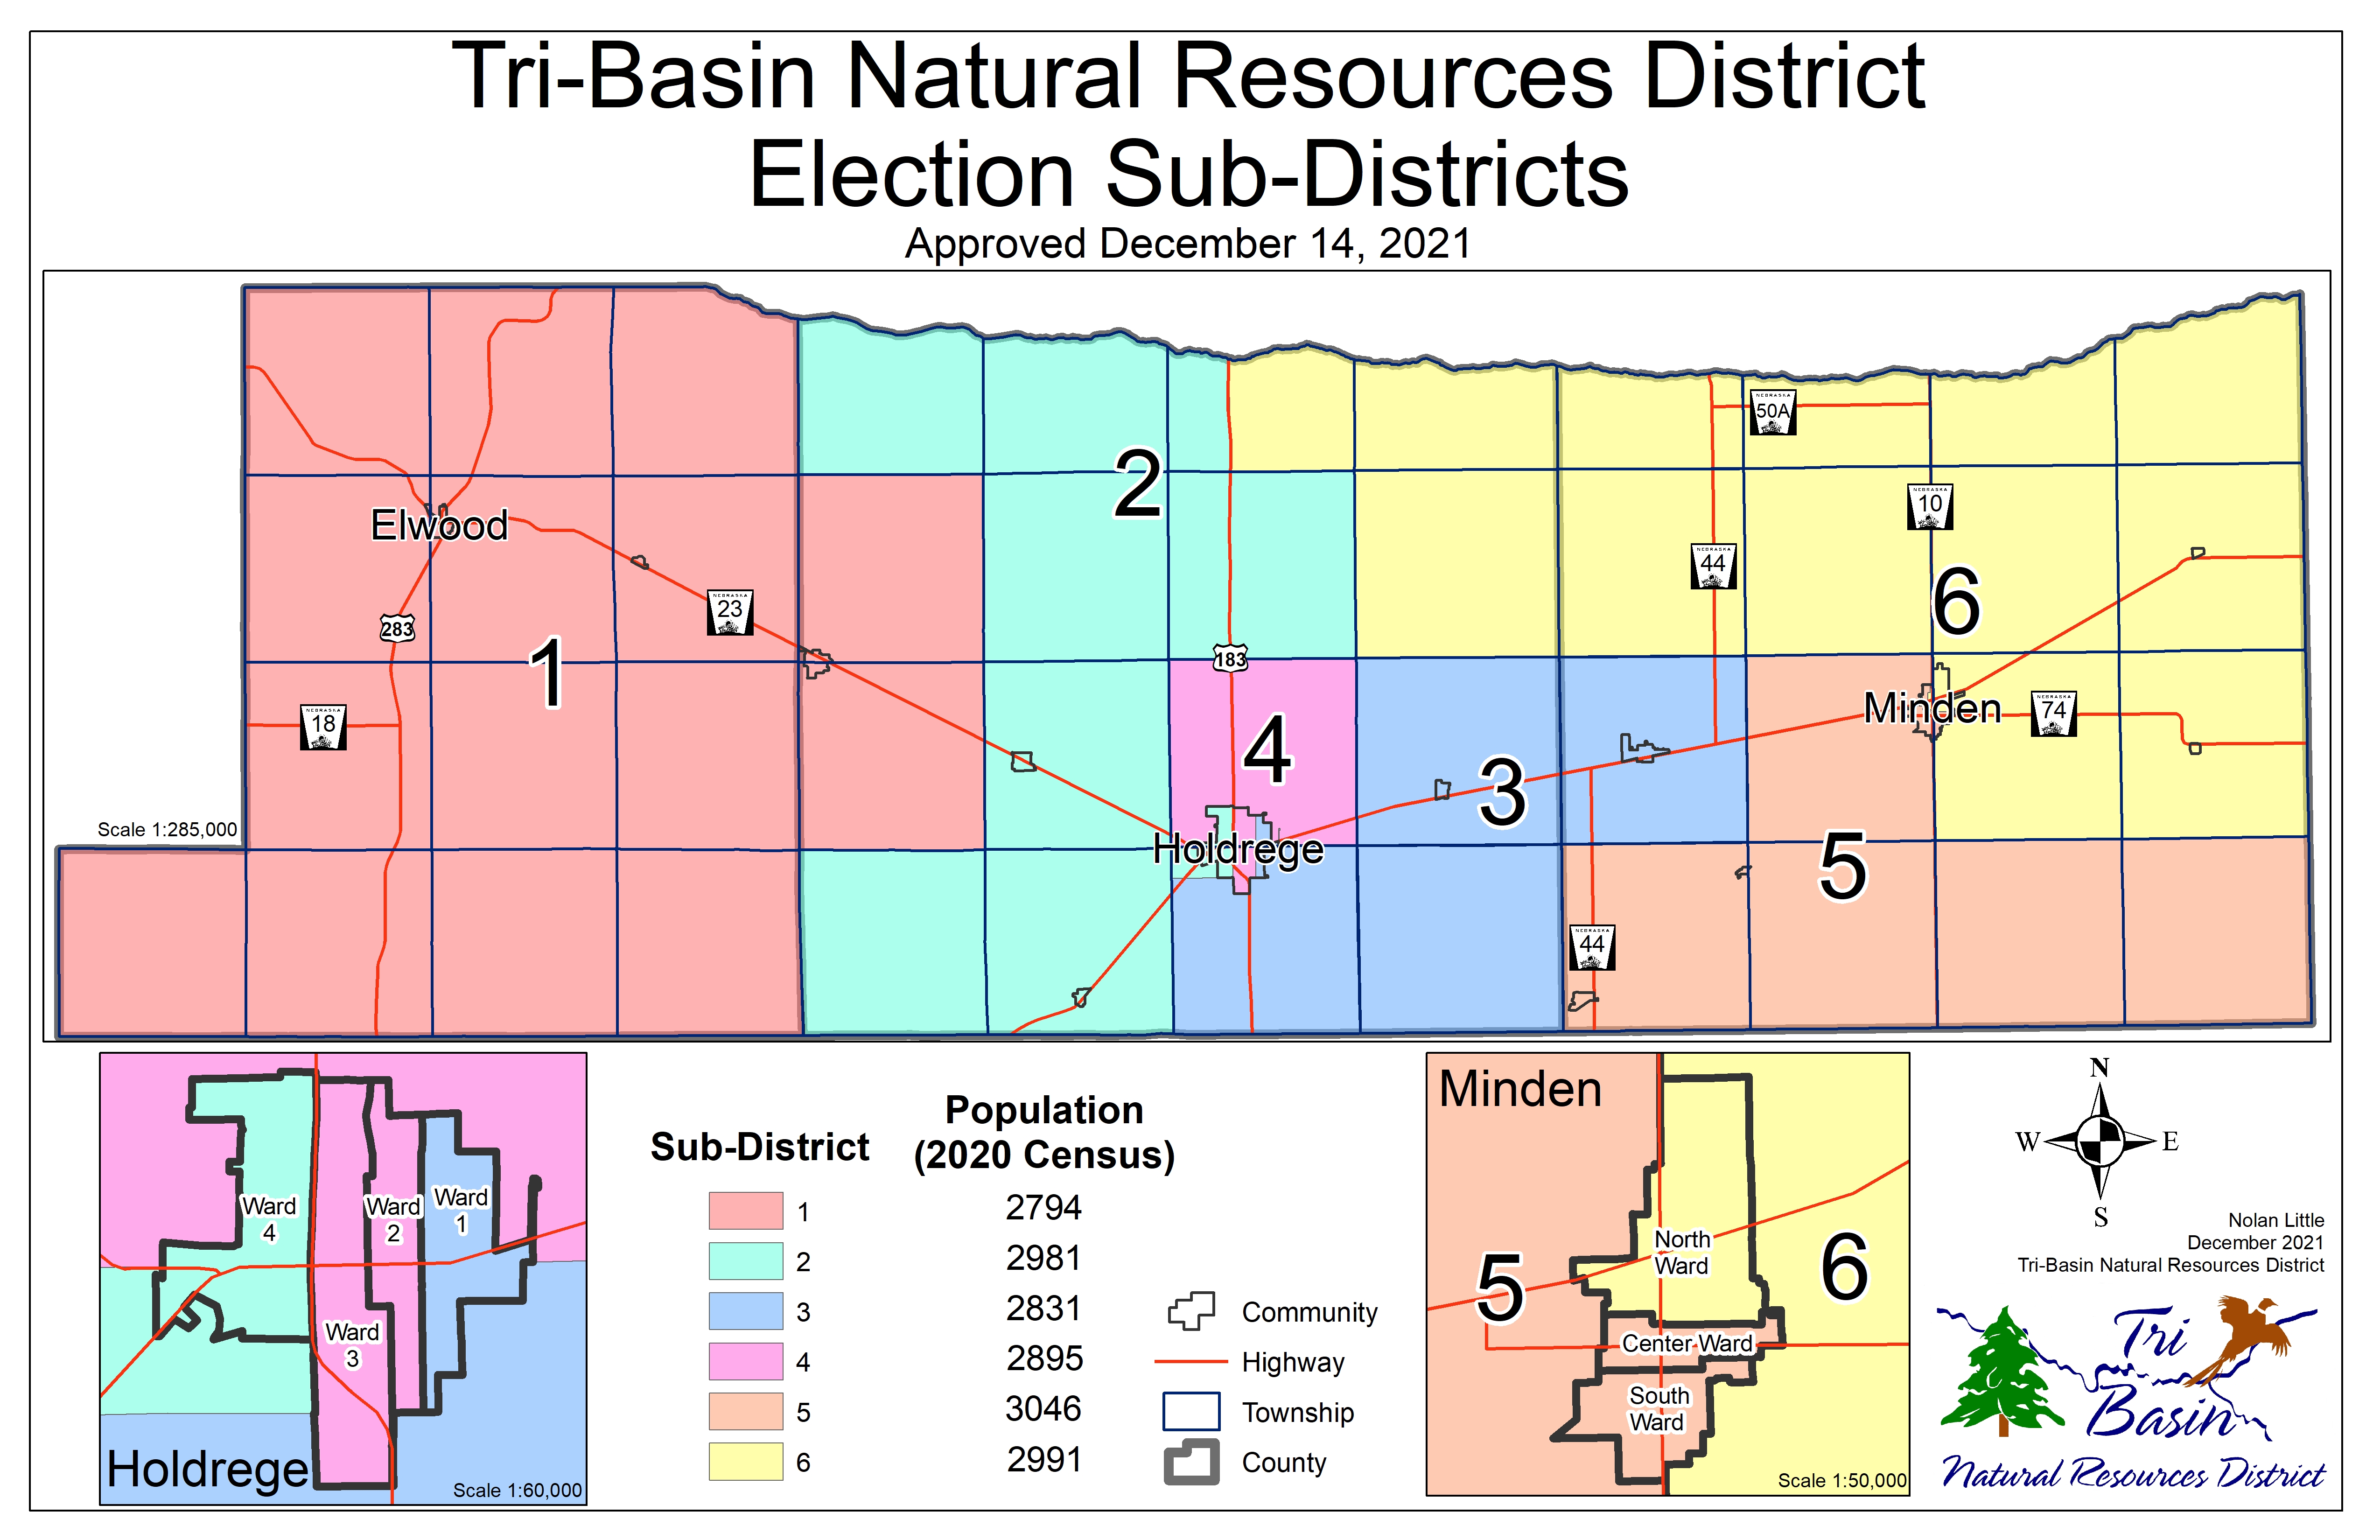 TBNRD Sub-Districts